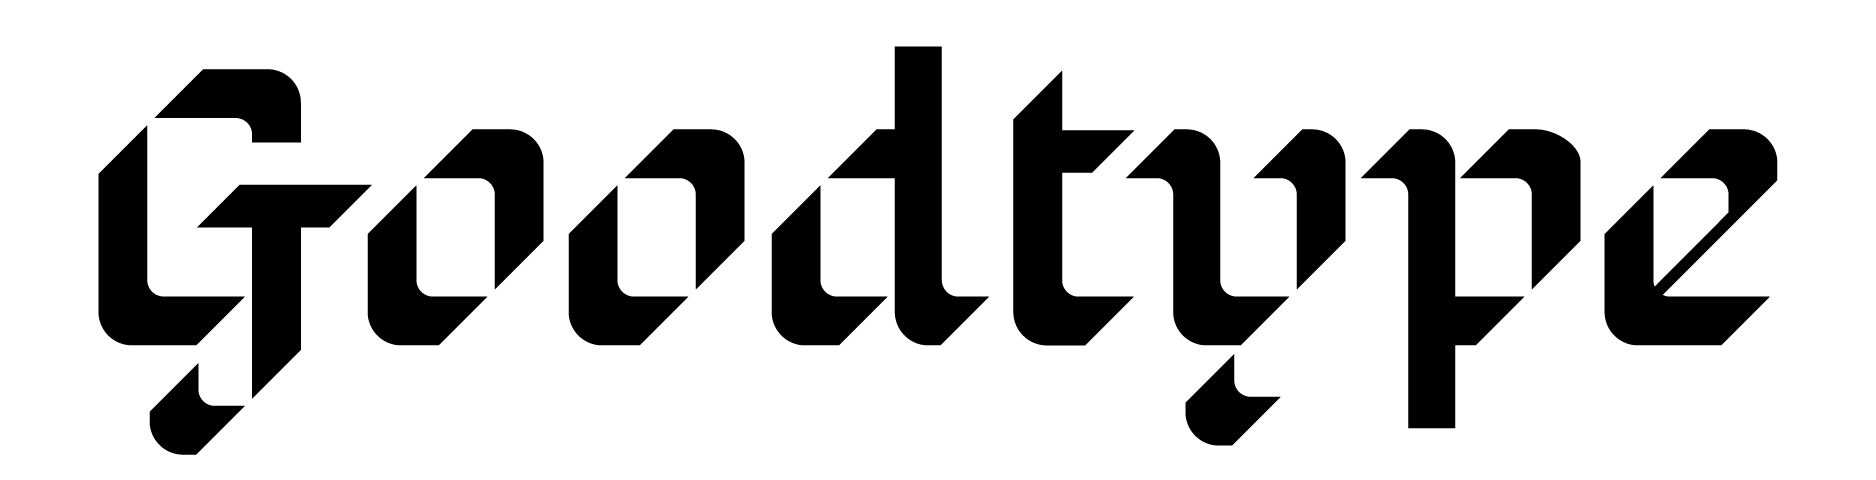 Goodtype logo wordmark